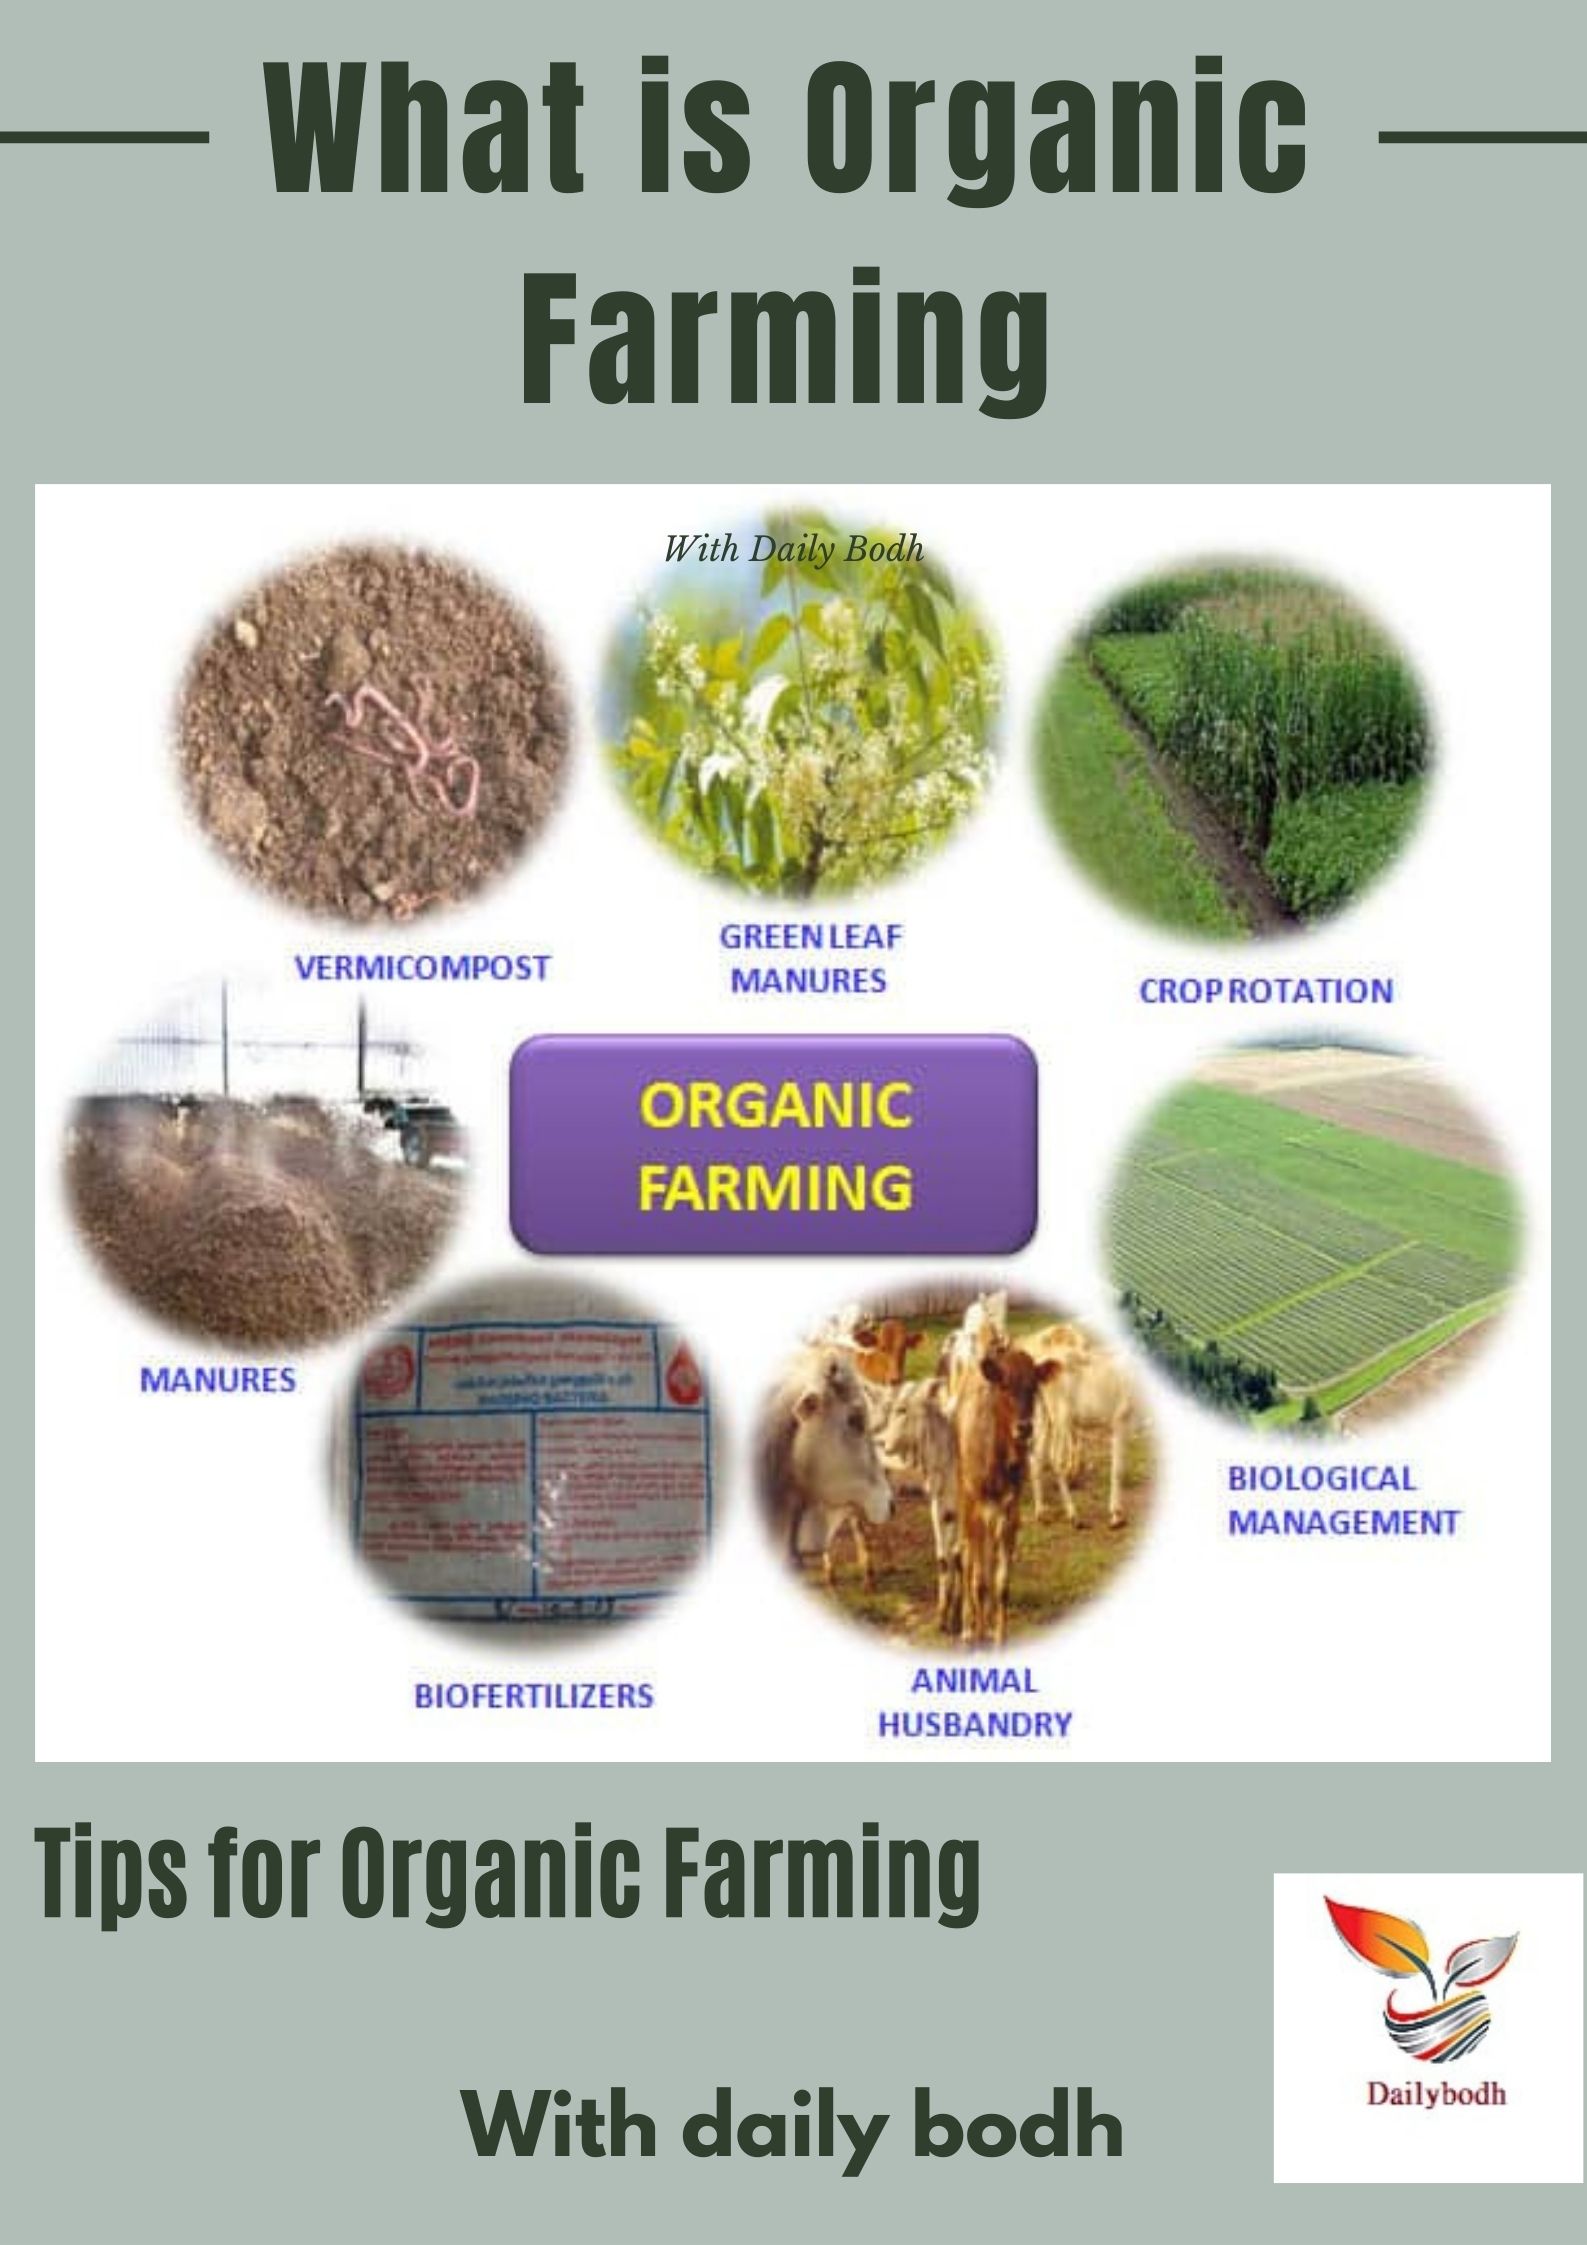 Tips for Organic Farming